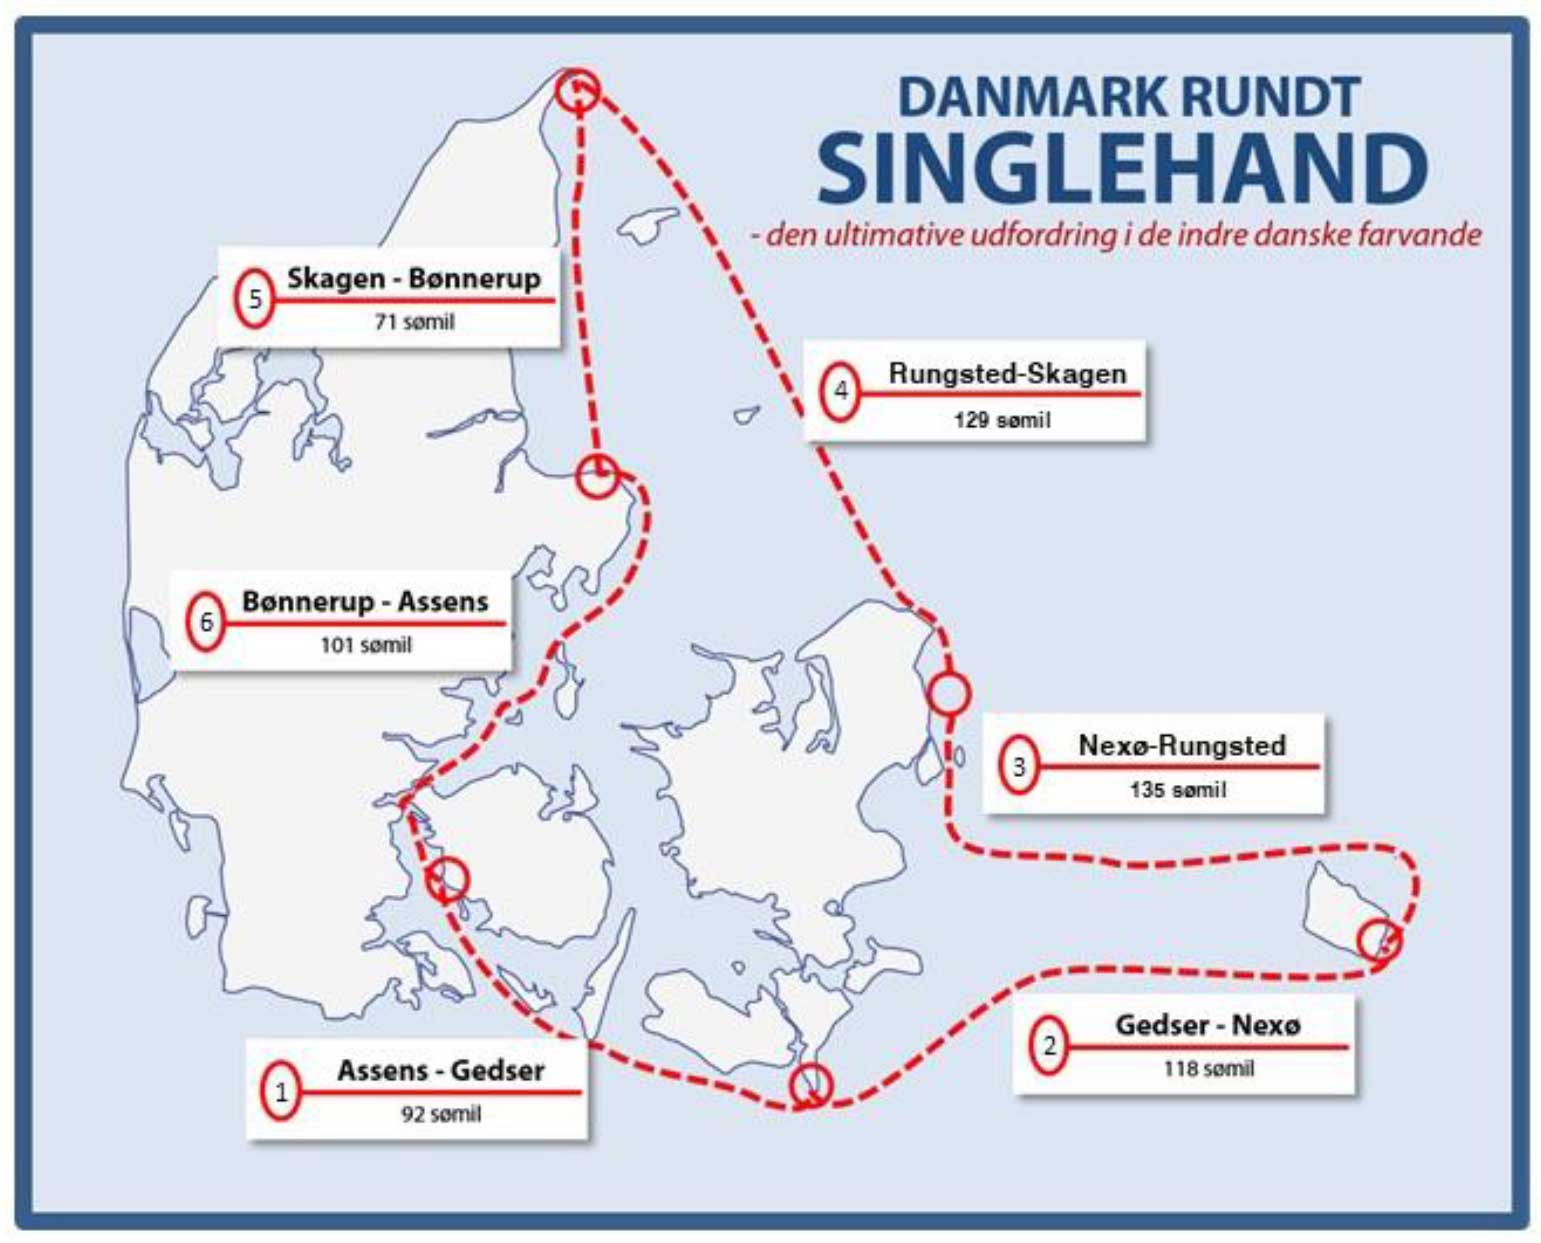 Danmark Rundt Singlehanded